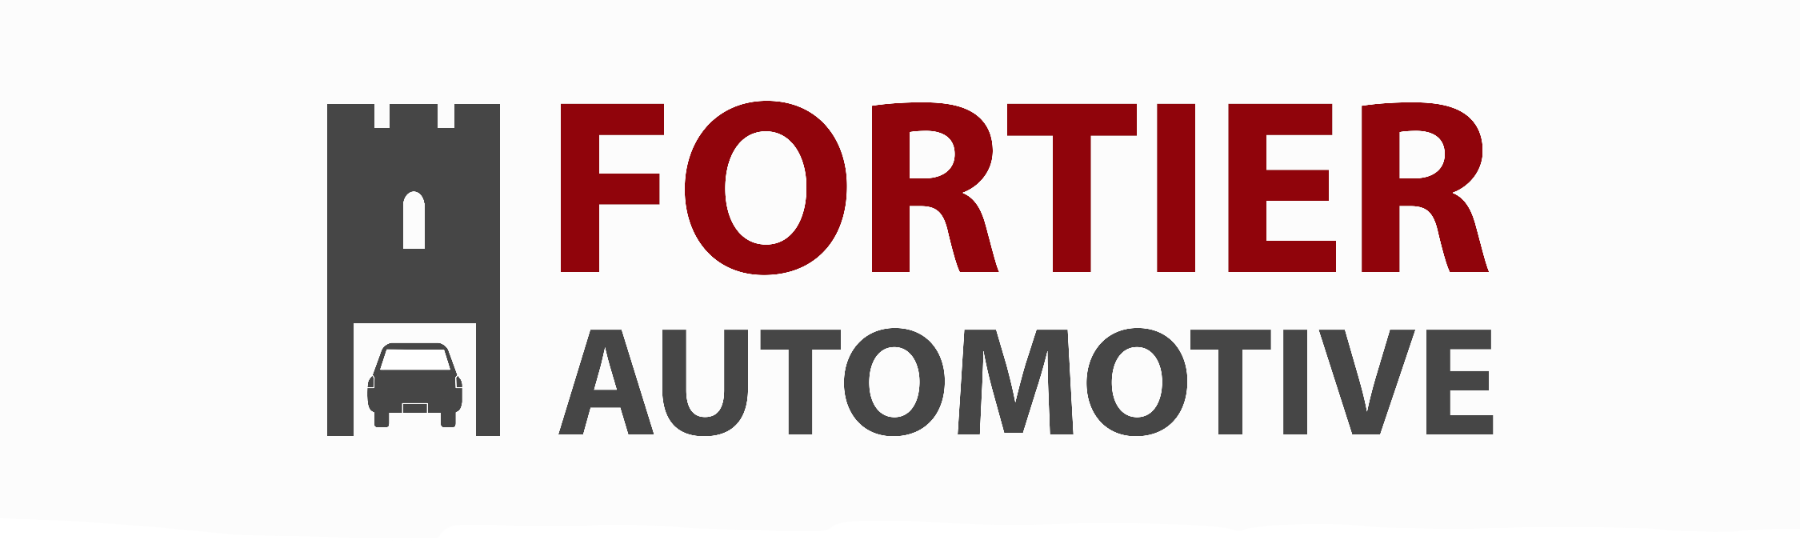 Fortier Automotive